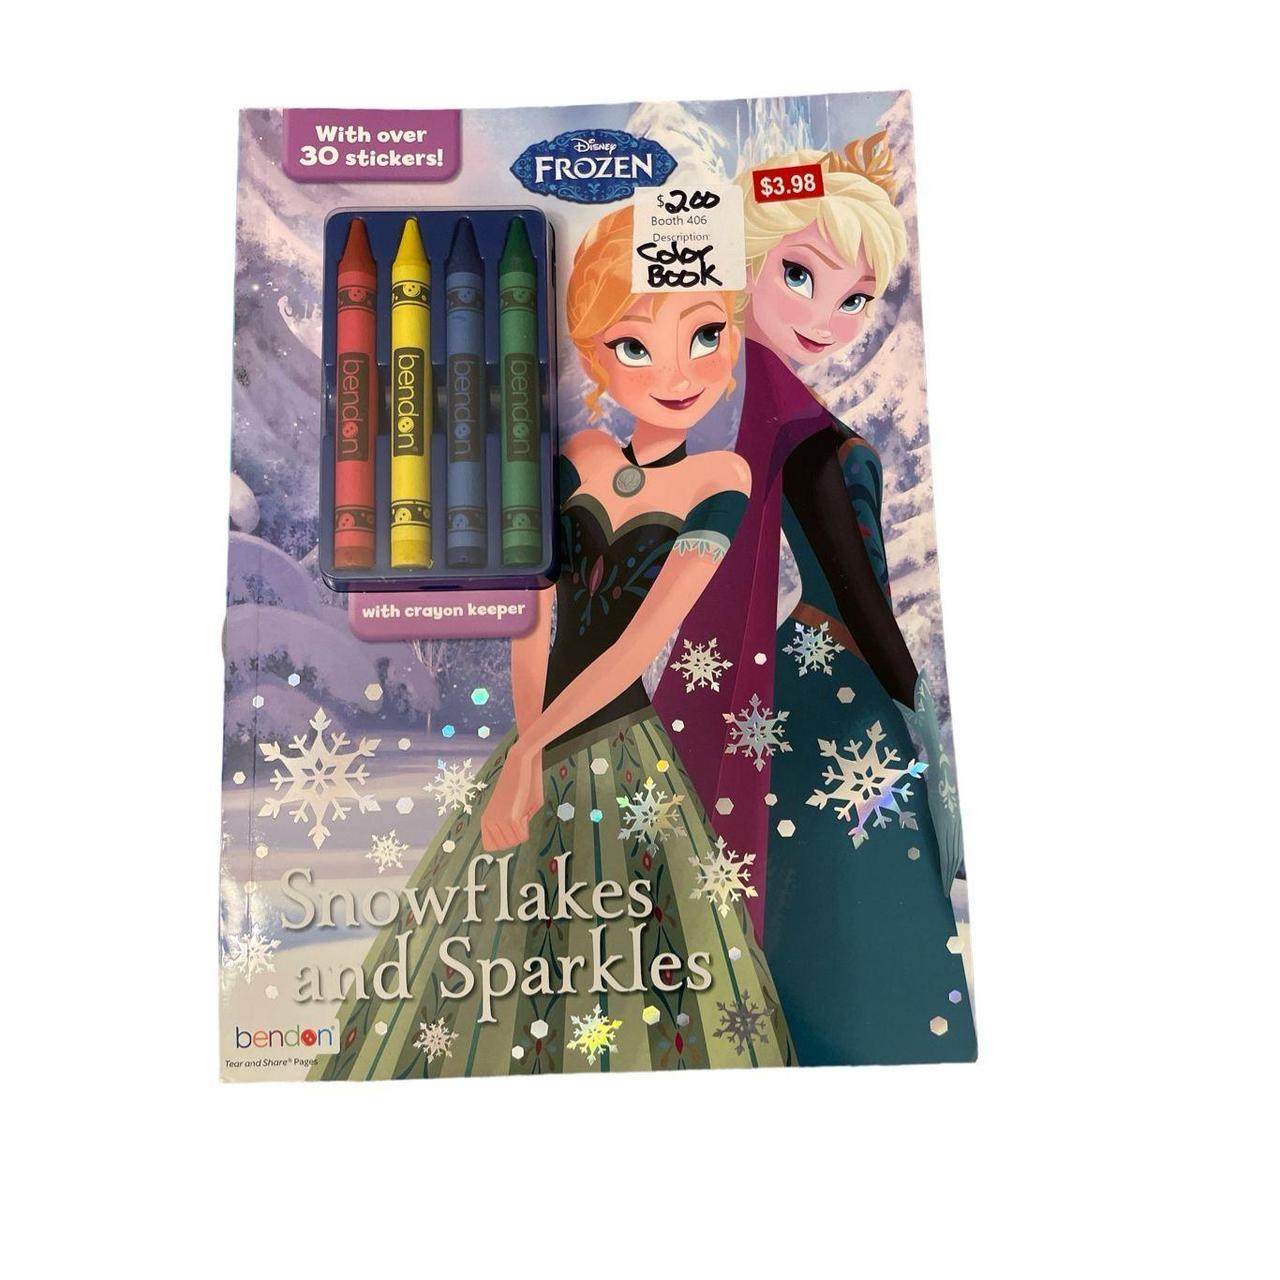 Disney Frozen coloring and sticker activity book - Depop